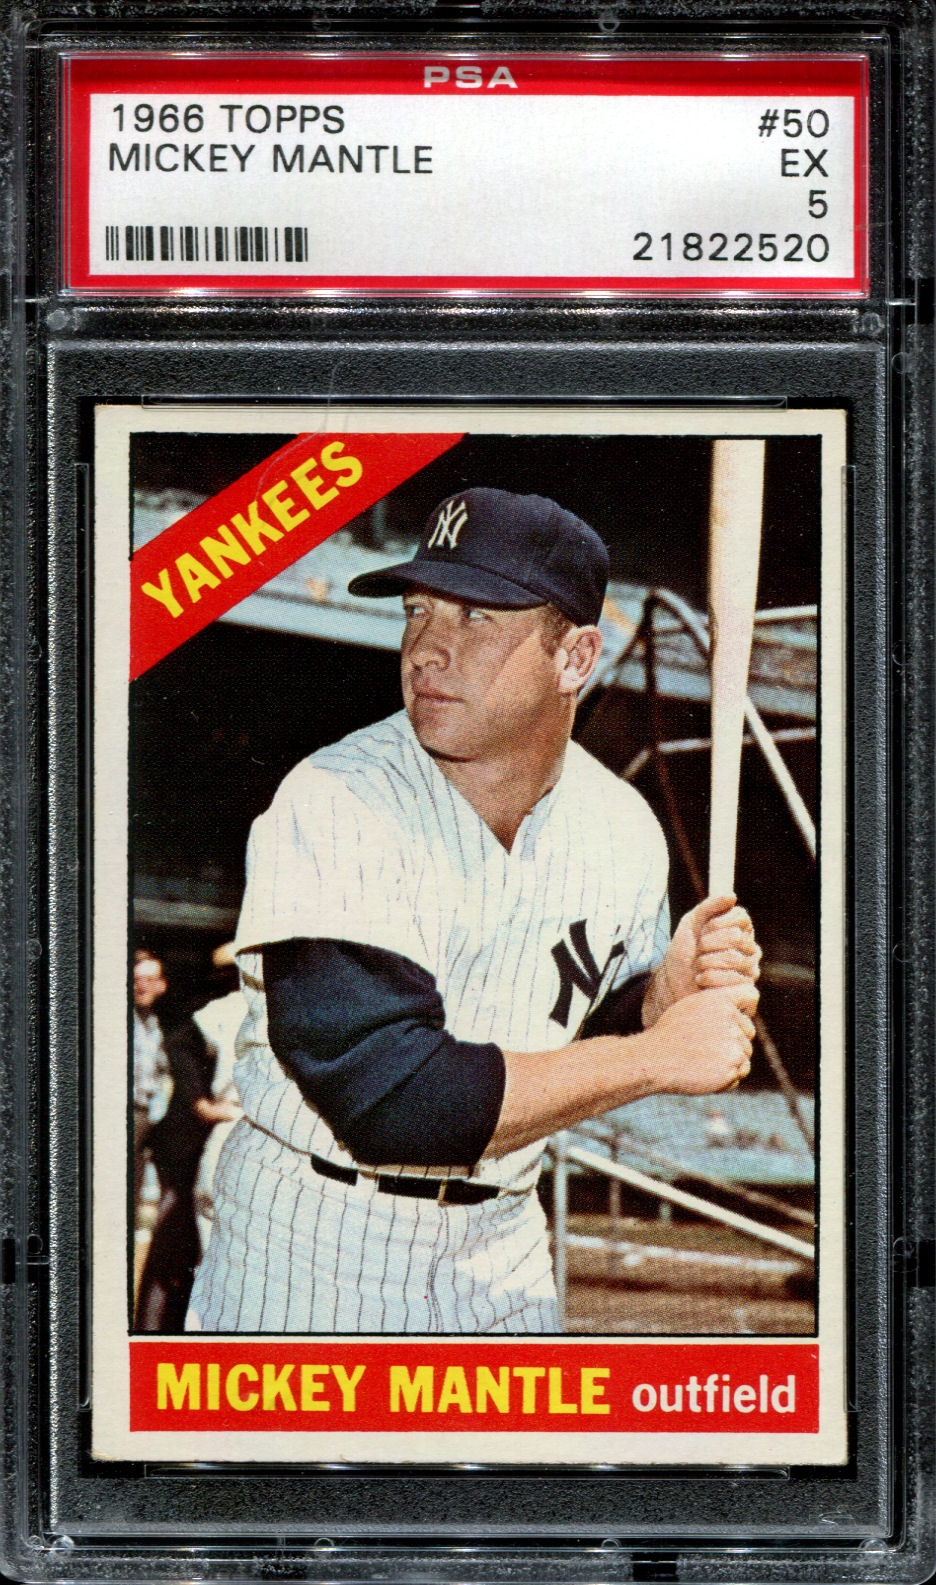 1966 Mickey Mantle Baseball Card